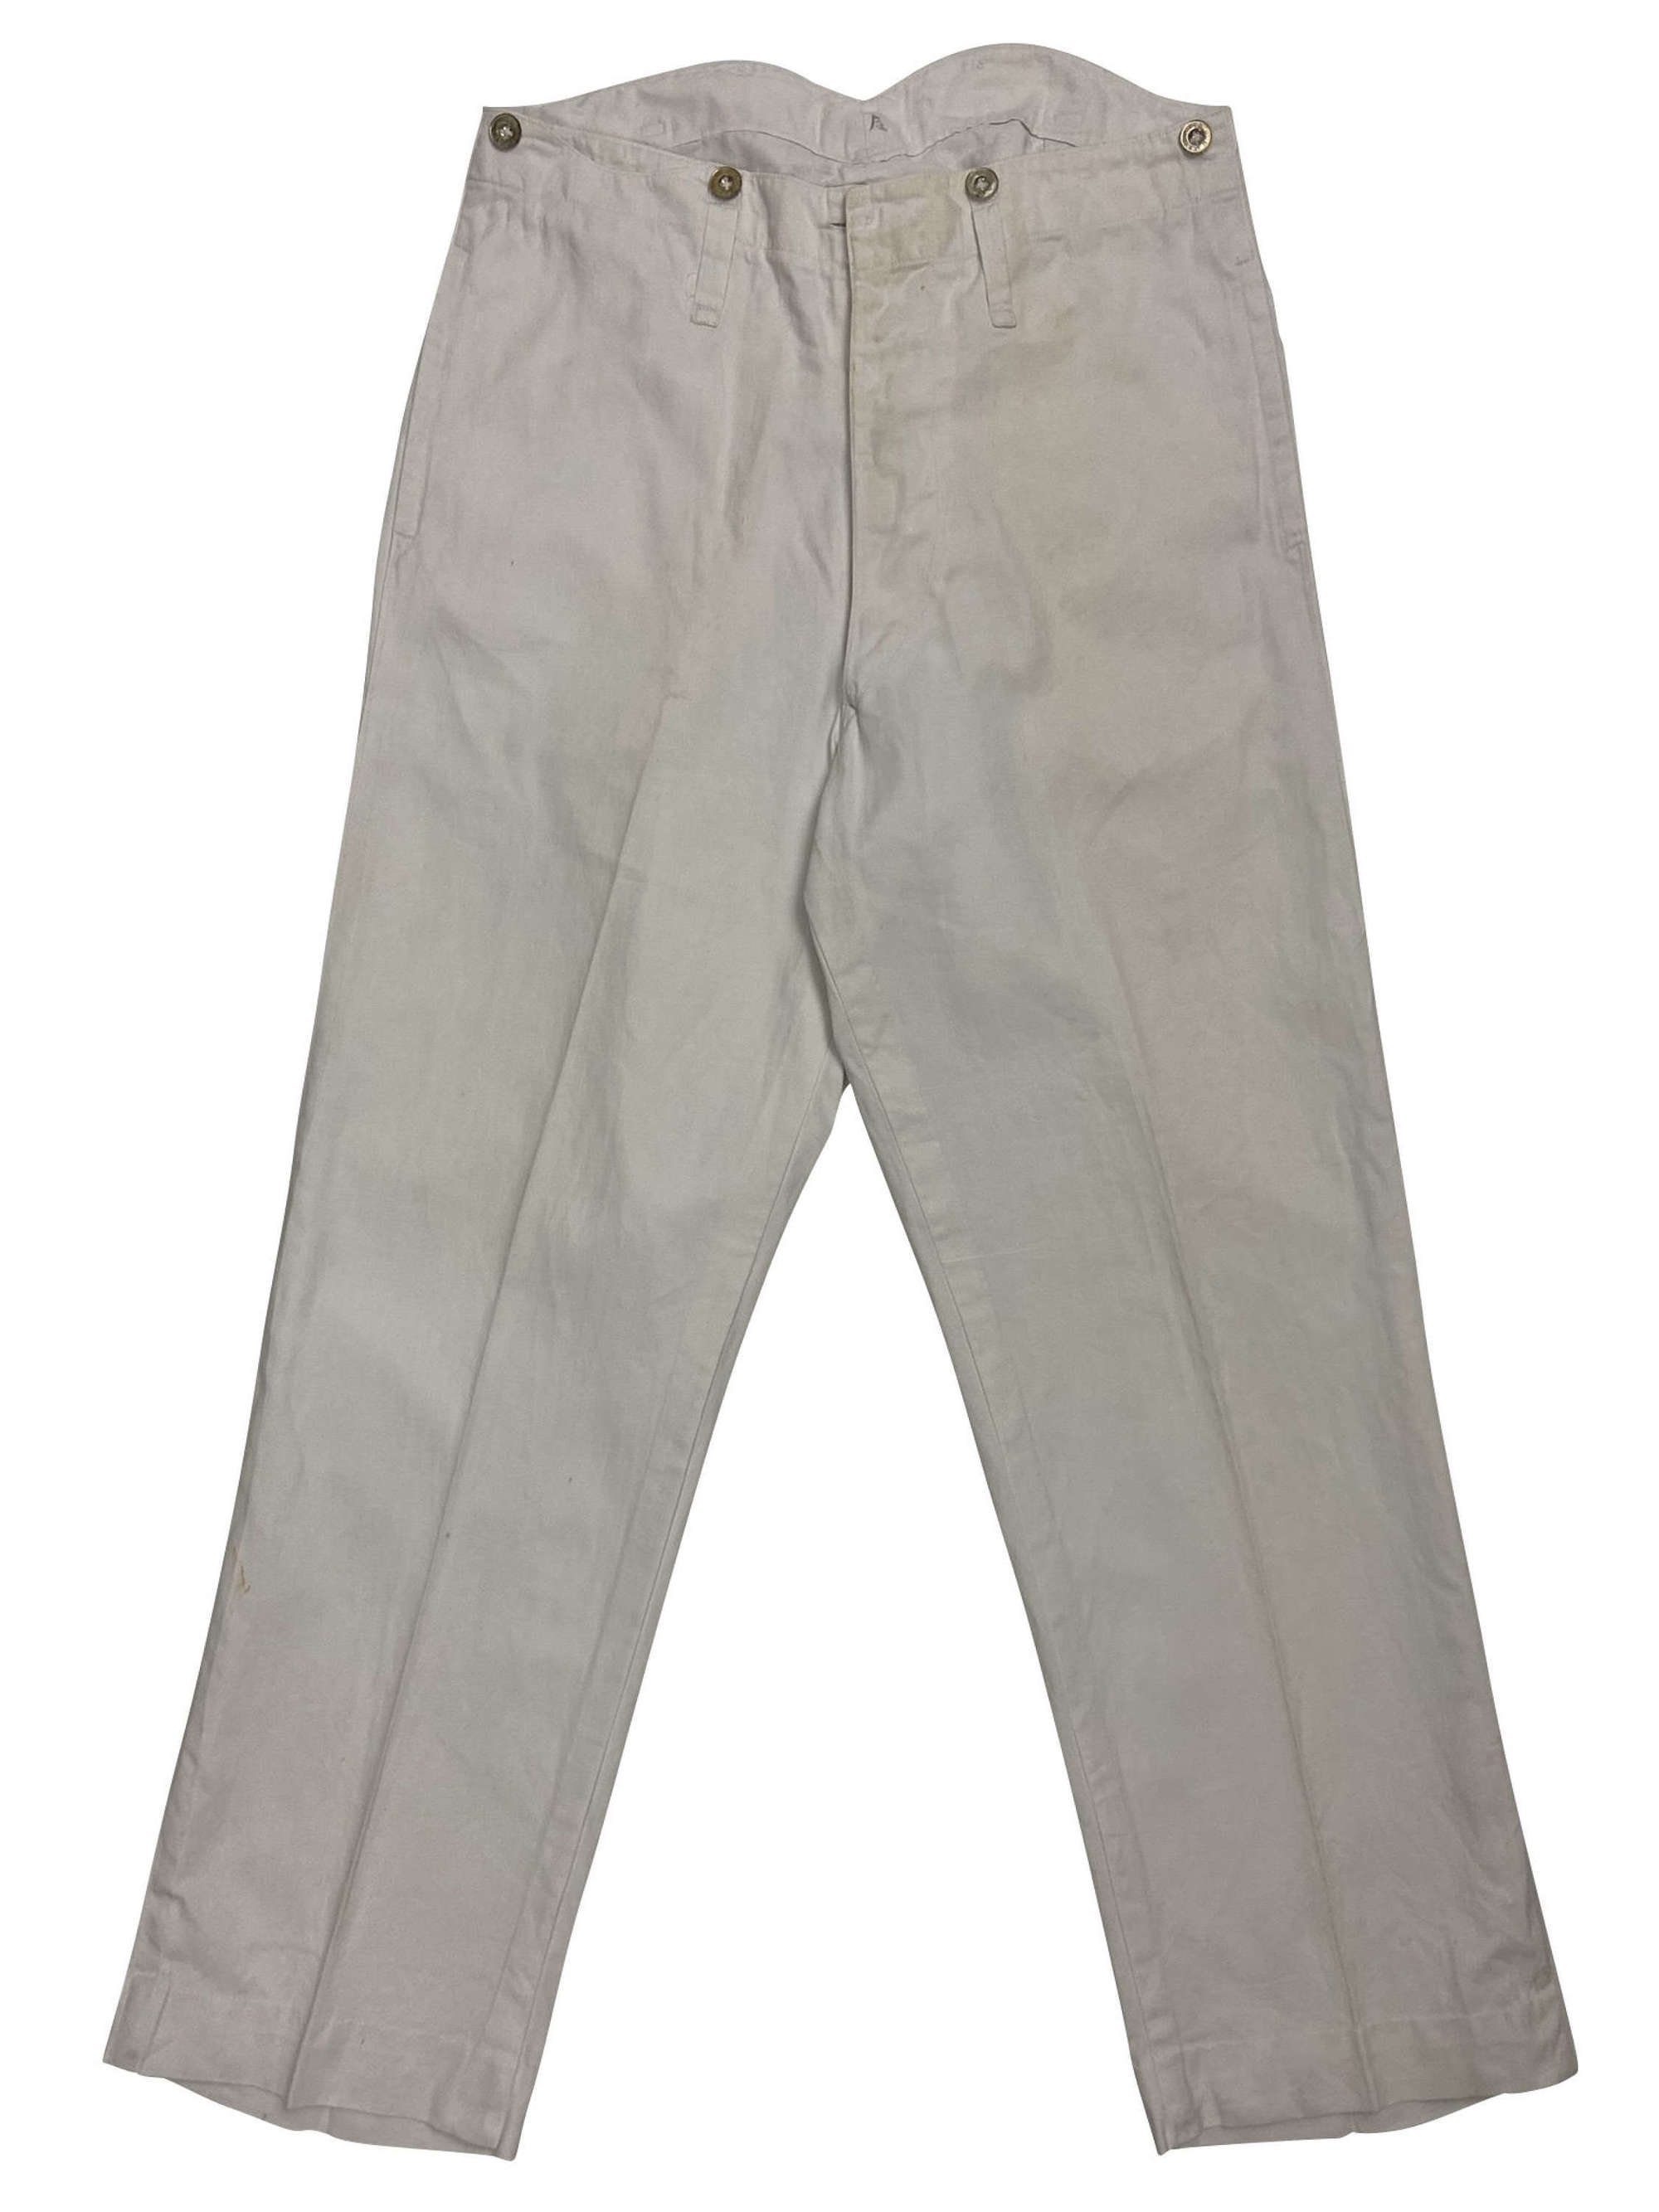 Original 1930s White Royal Navy Work Trousers